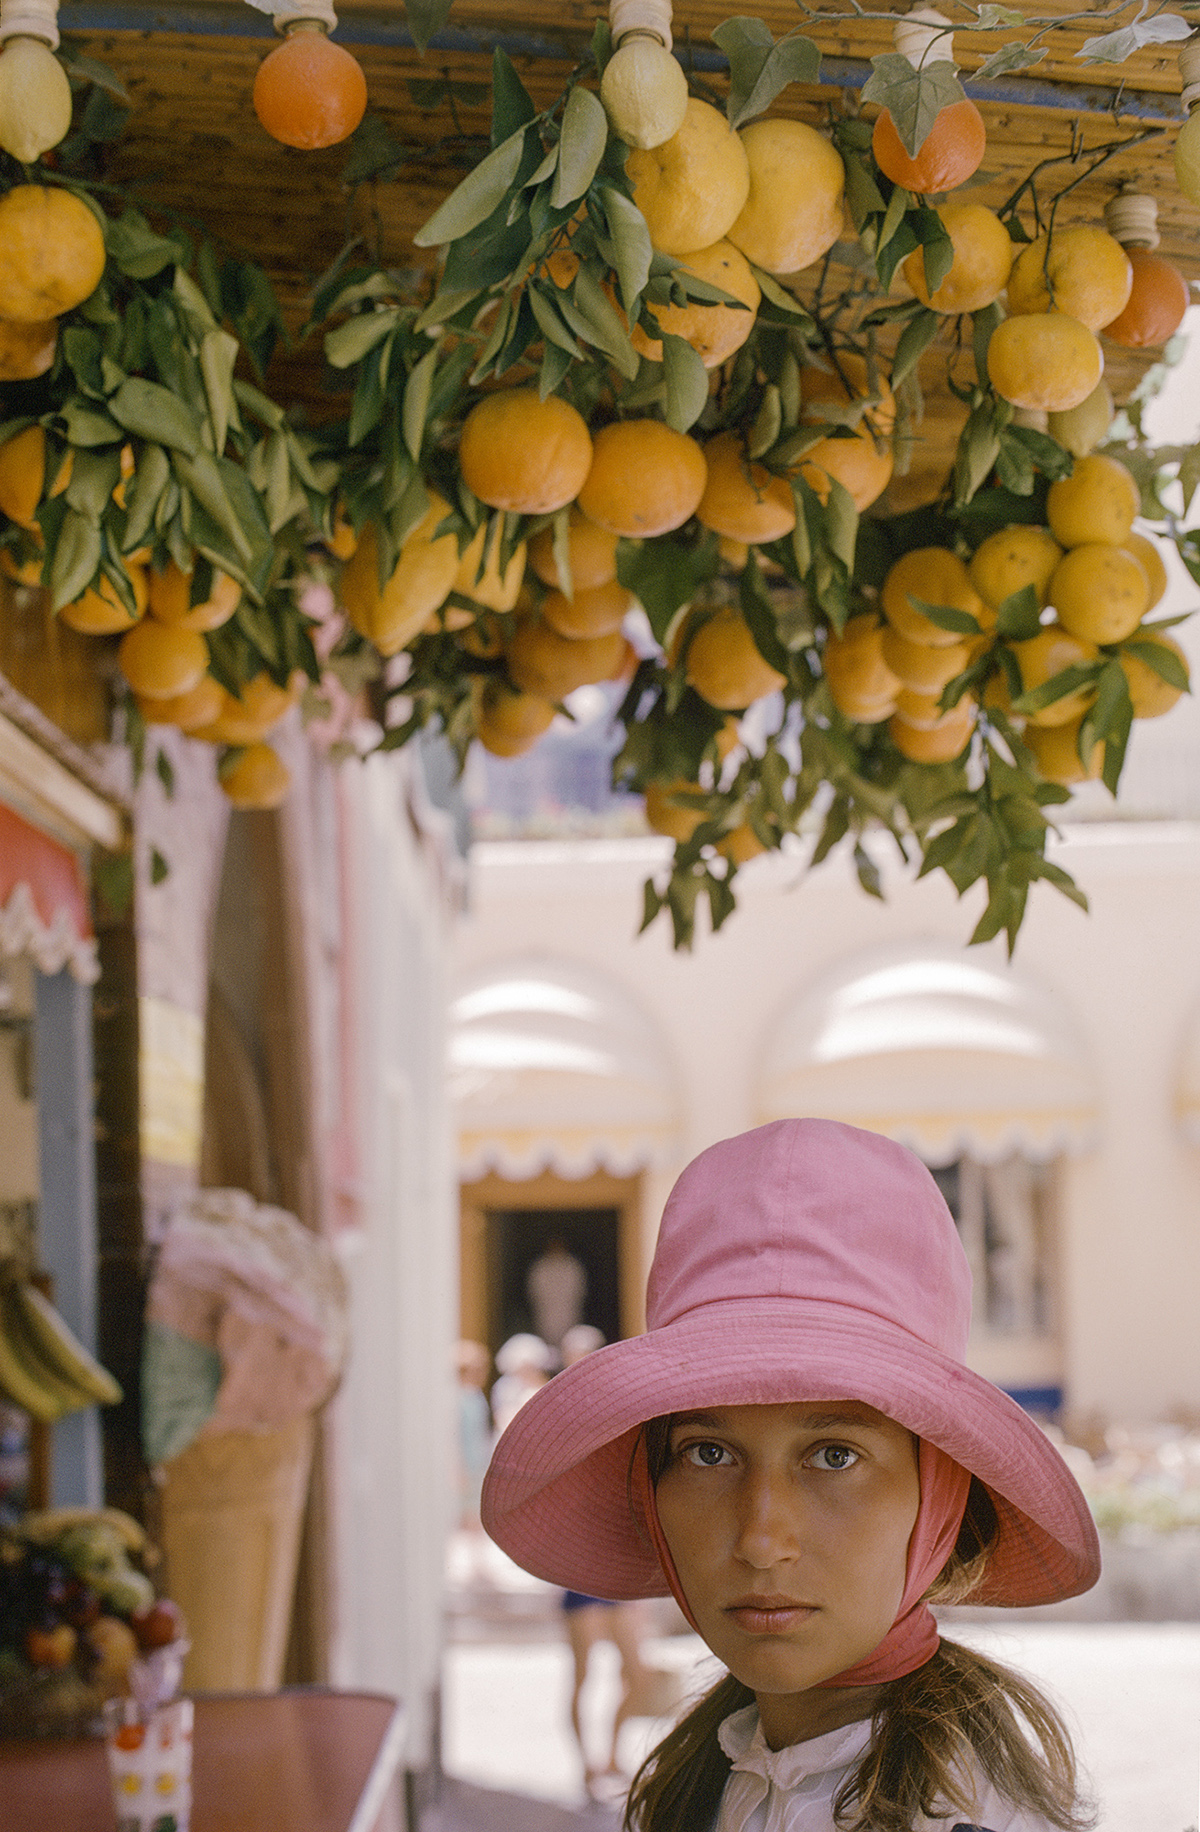 Anja with Oranges, Naples, Italy, 1965